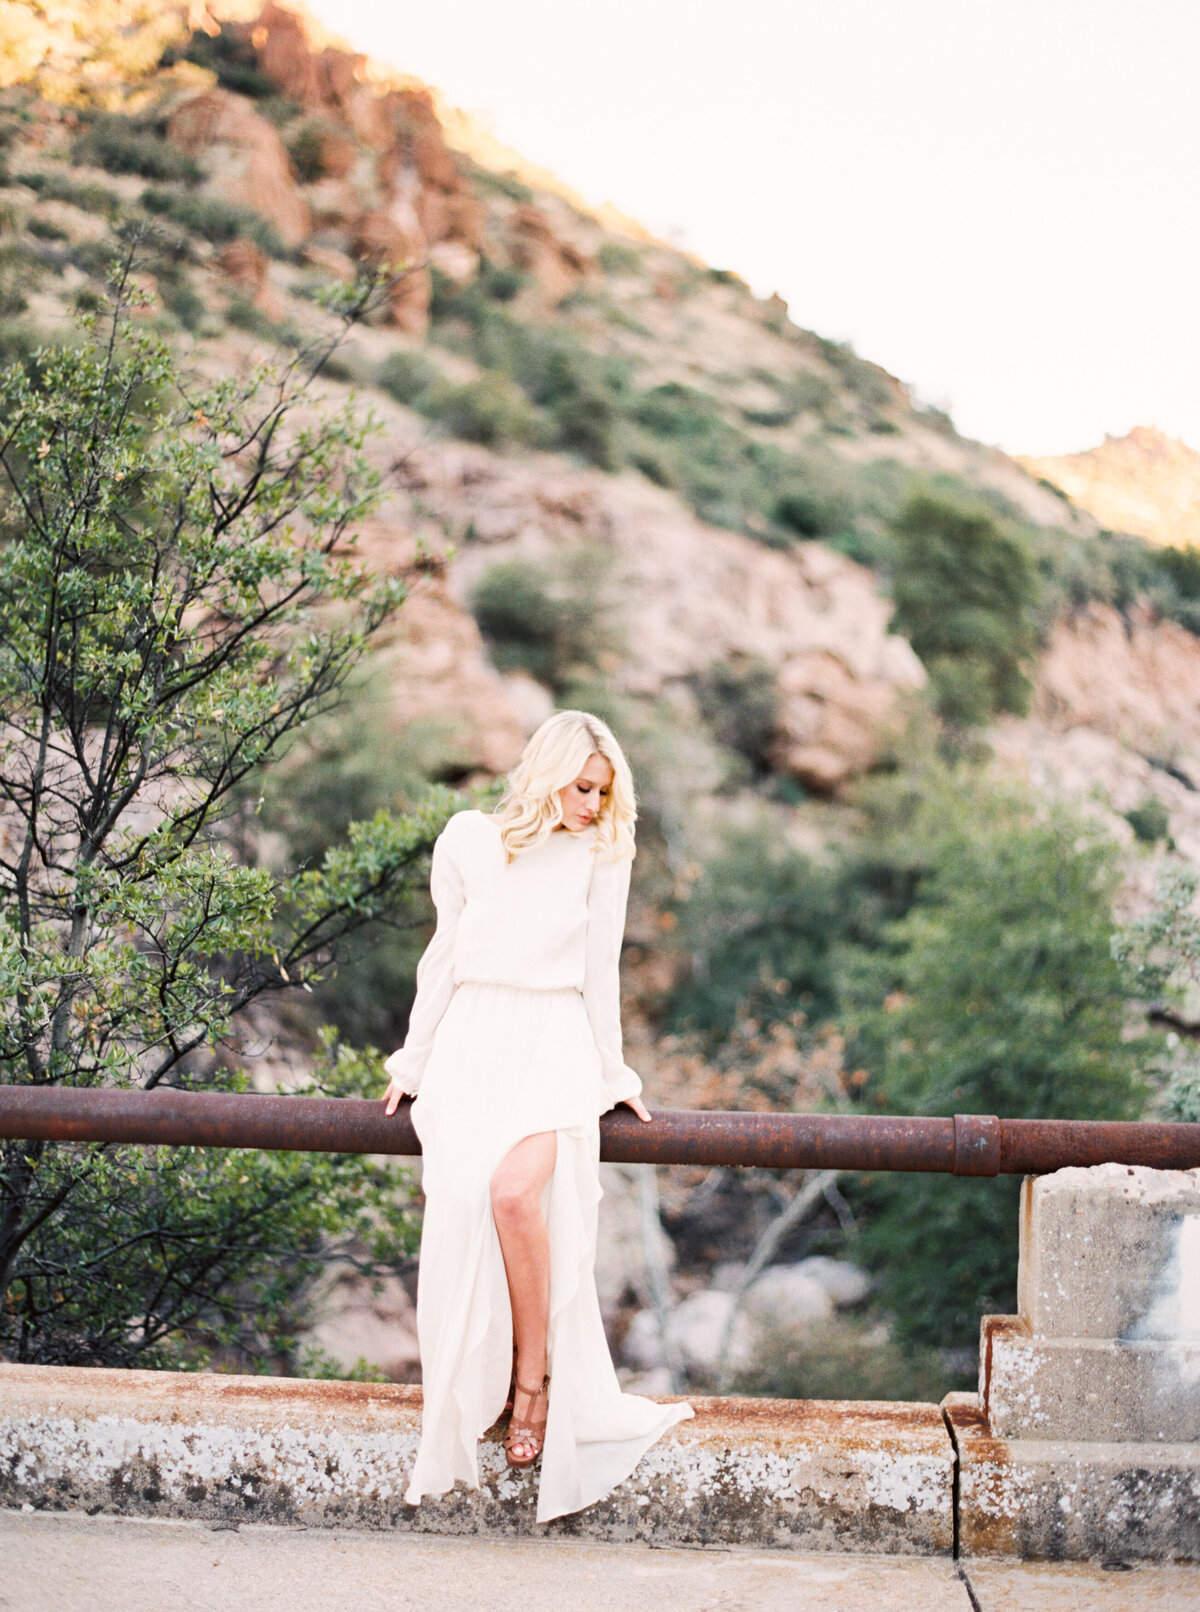 Canyon Wedding Inspiration | Superior, Arizona | Mary Claire Photography | Arizona & Destination Fine Art Wedding Photographer